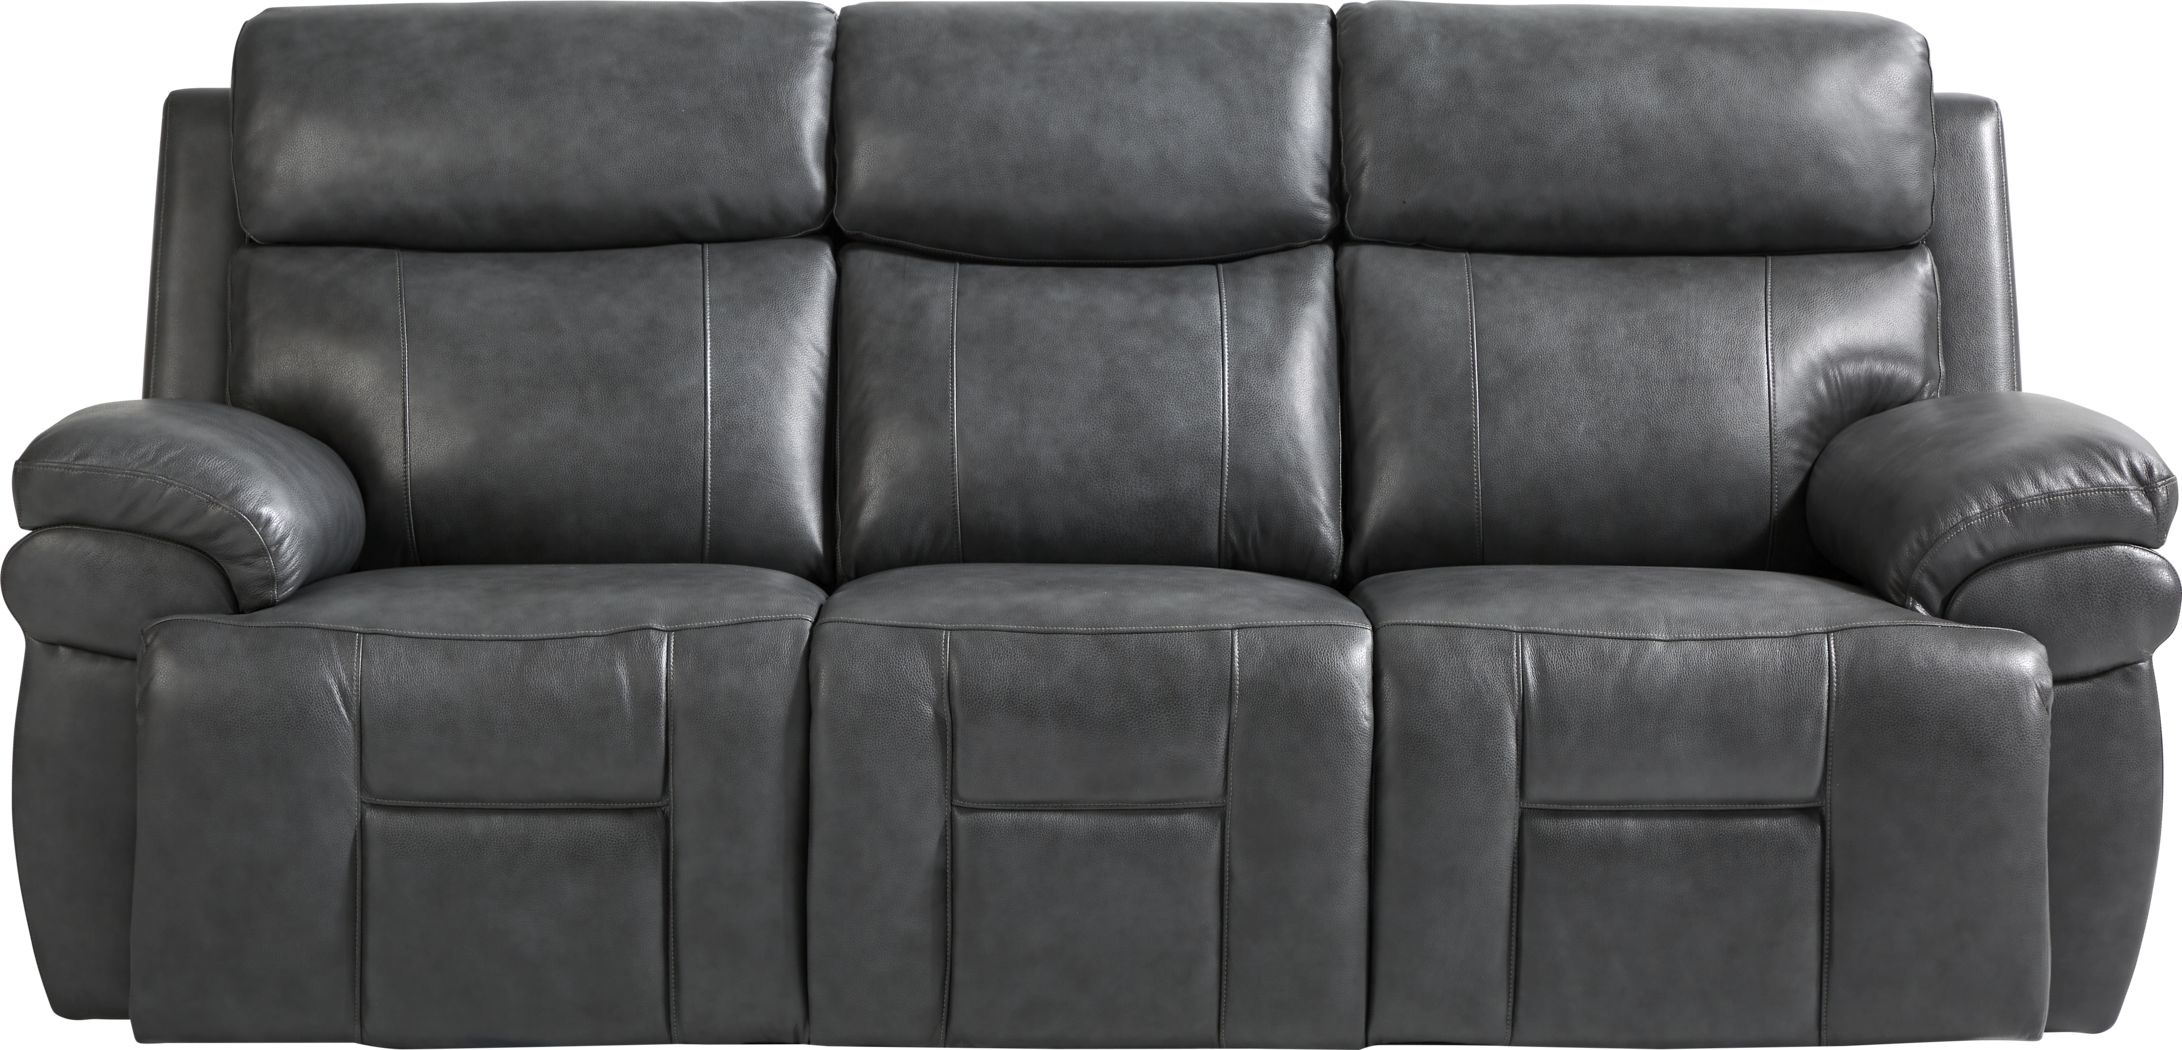 triple power leather sofa